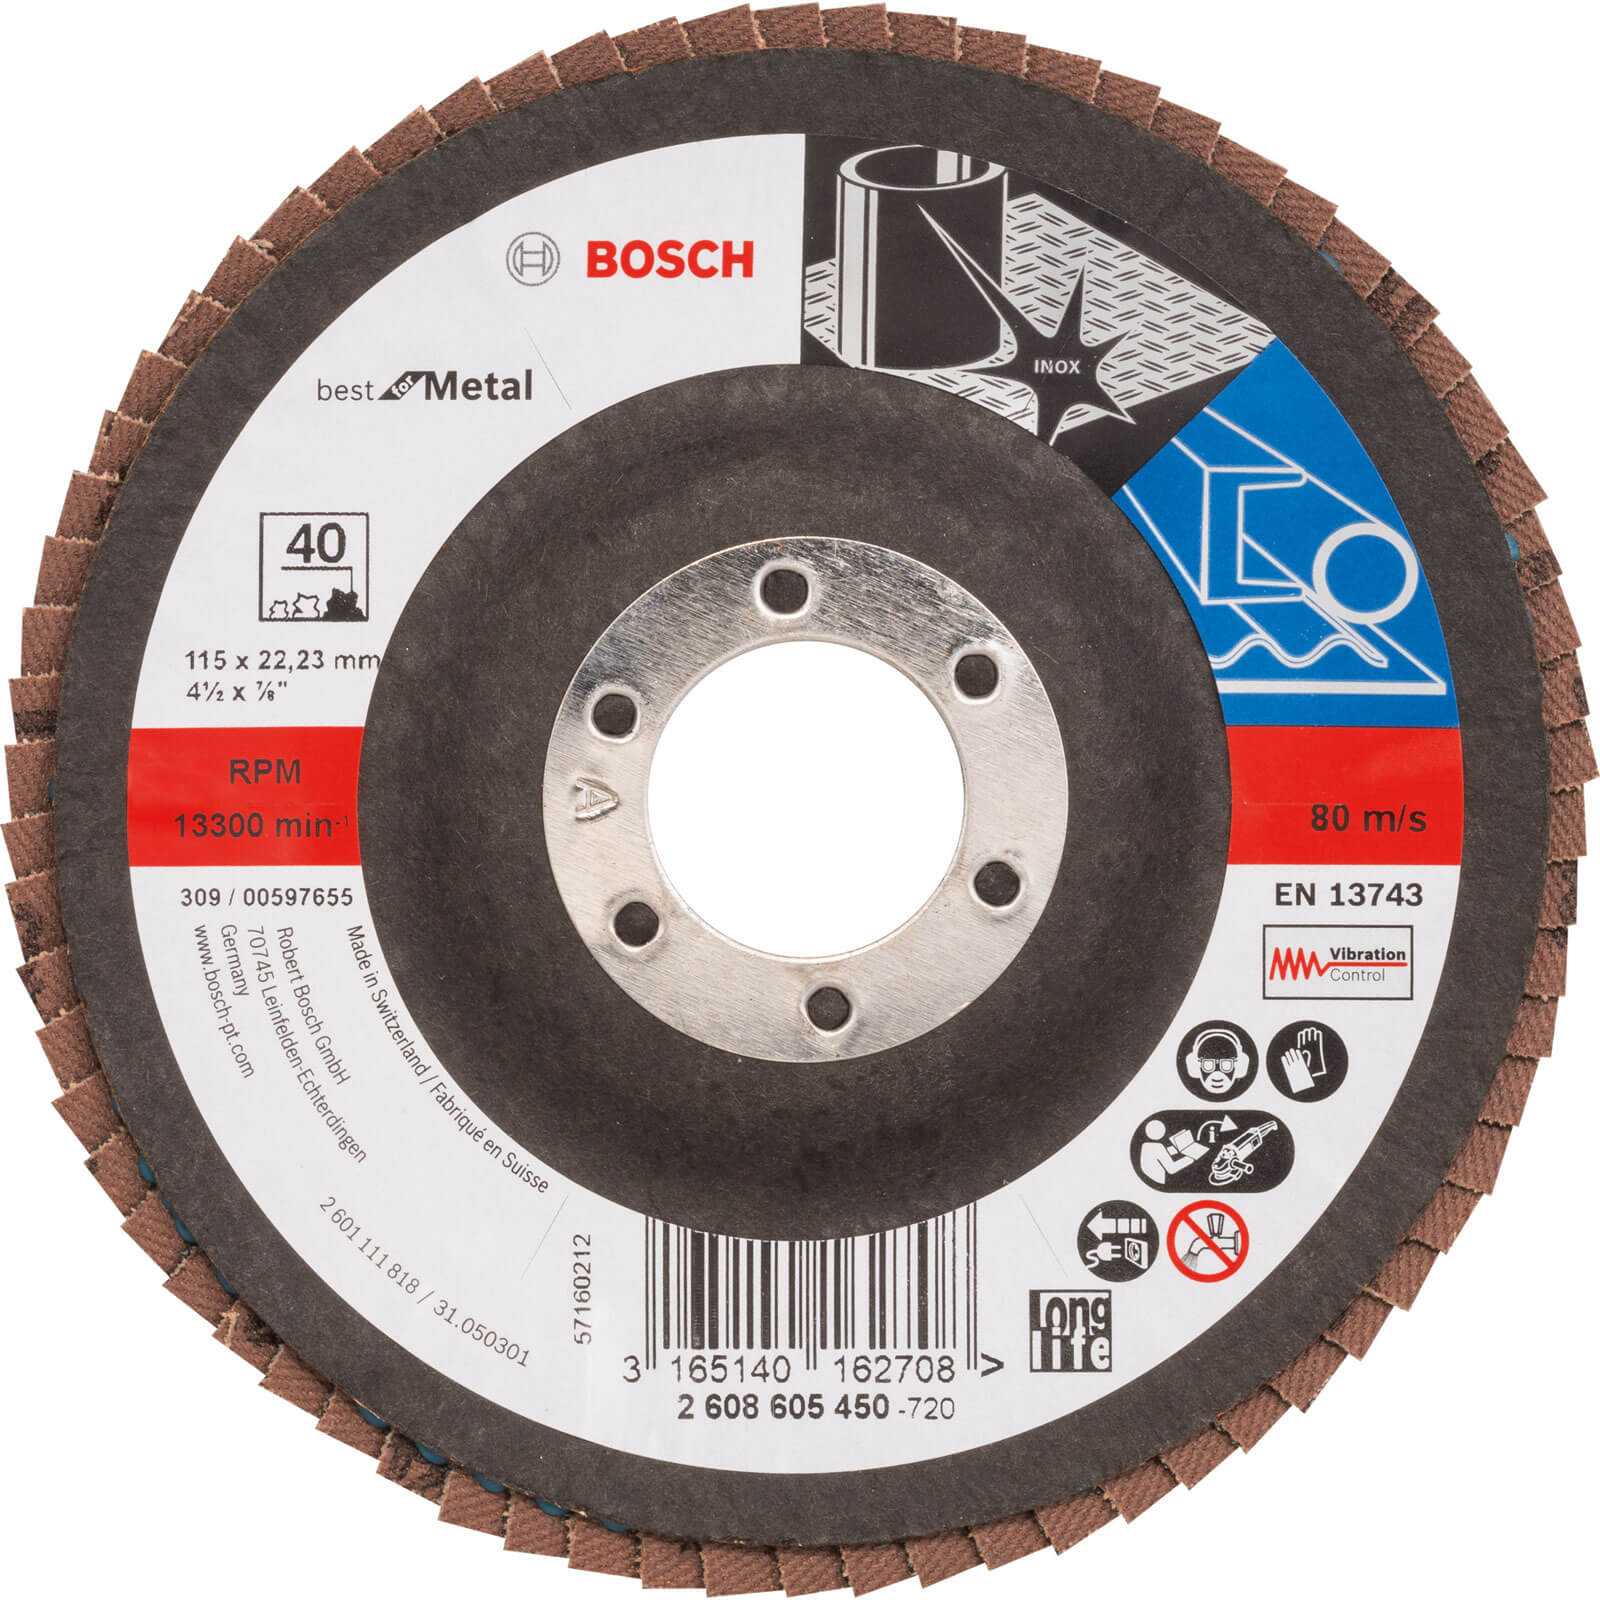 Image of Bosch Zirconium Abrasive Flap Disc 115mm 40g